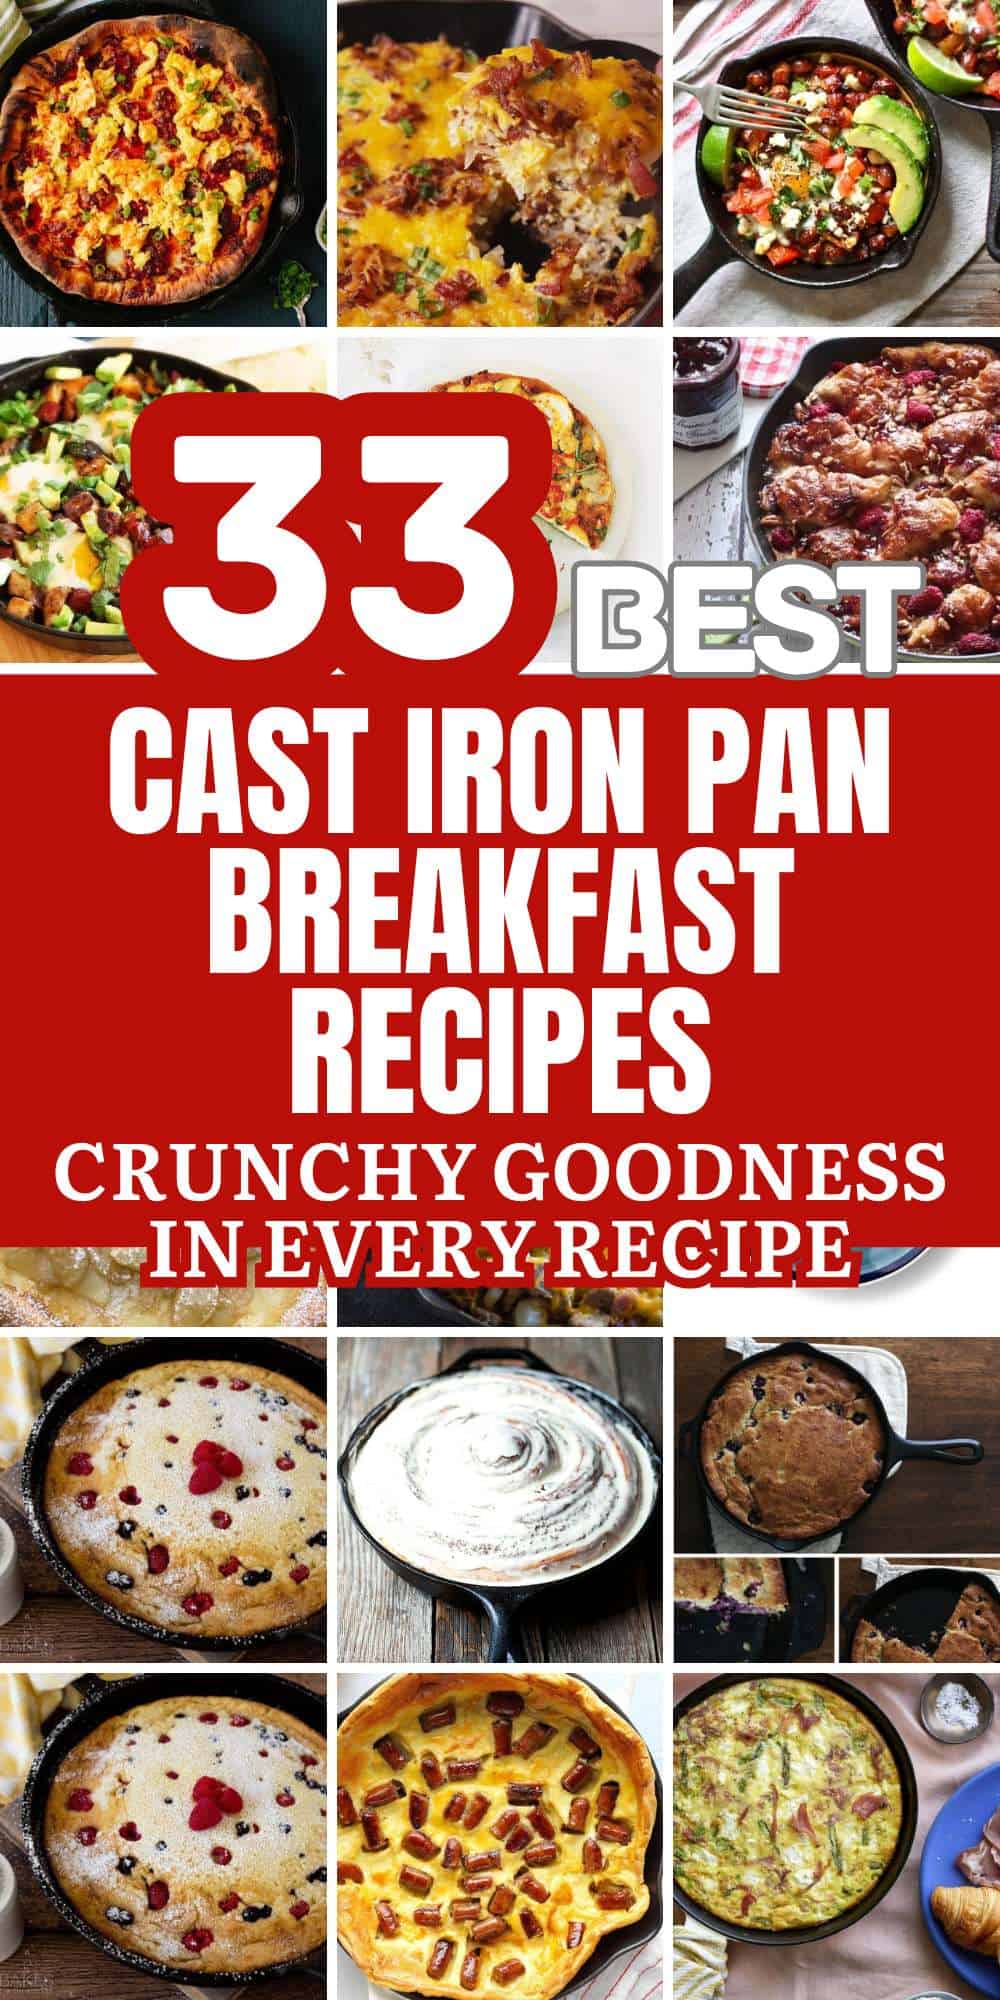 Cast Iron Skillet Breakfast Recipe